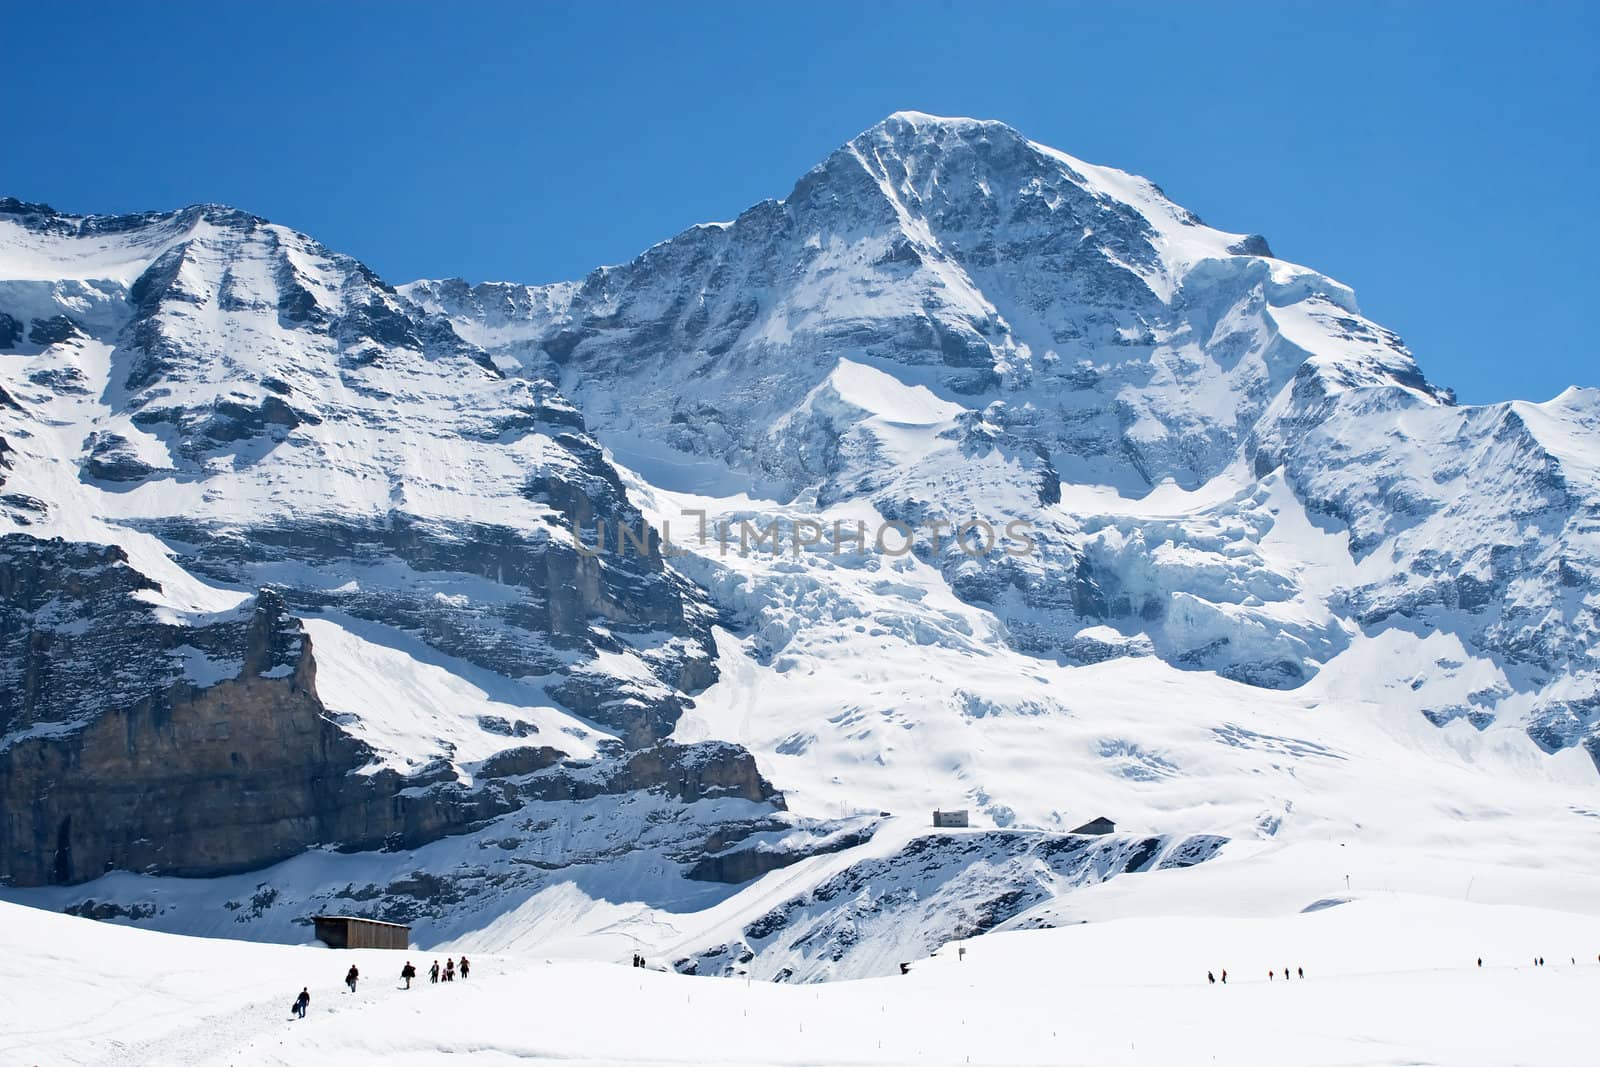 Winter hiking route in the Jungfrau region